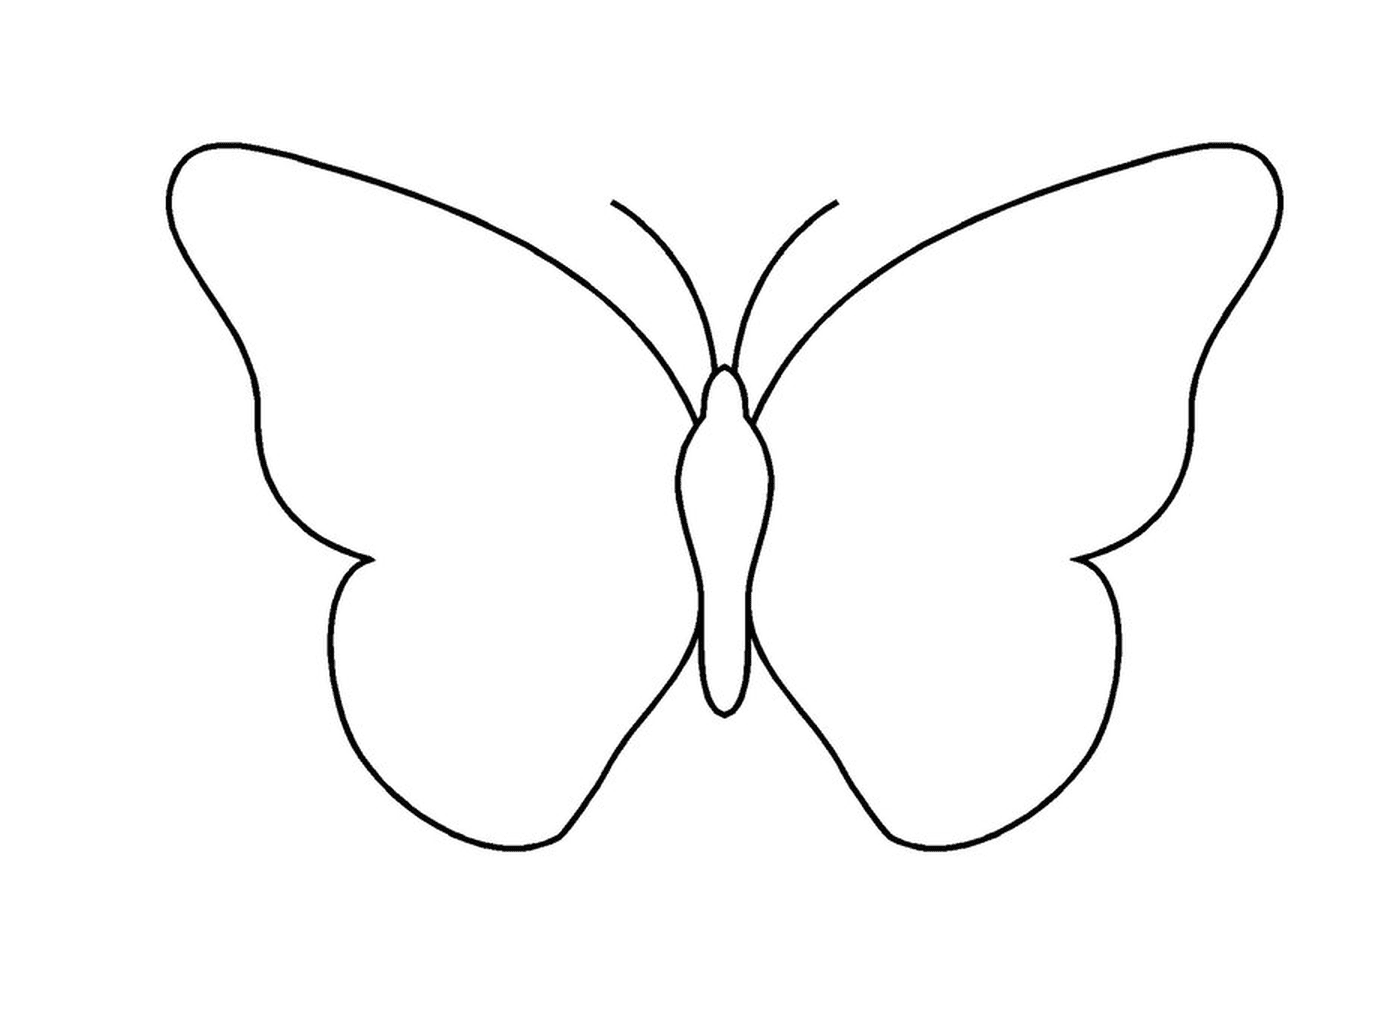  elegante y flirteando mariposa 